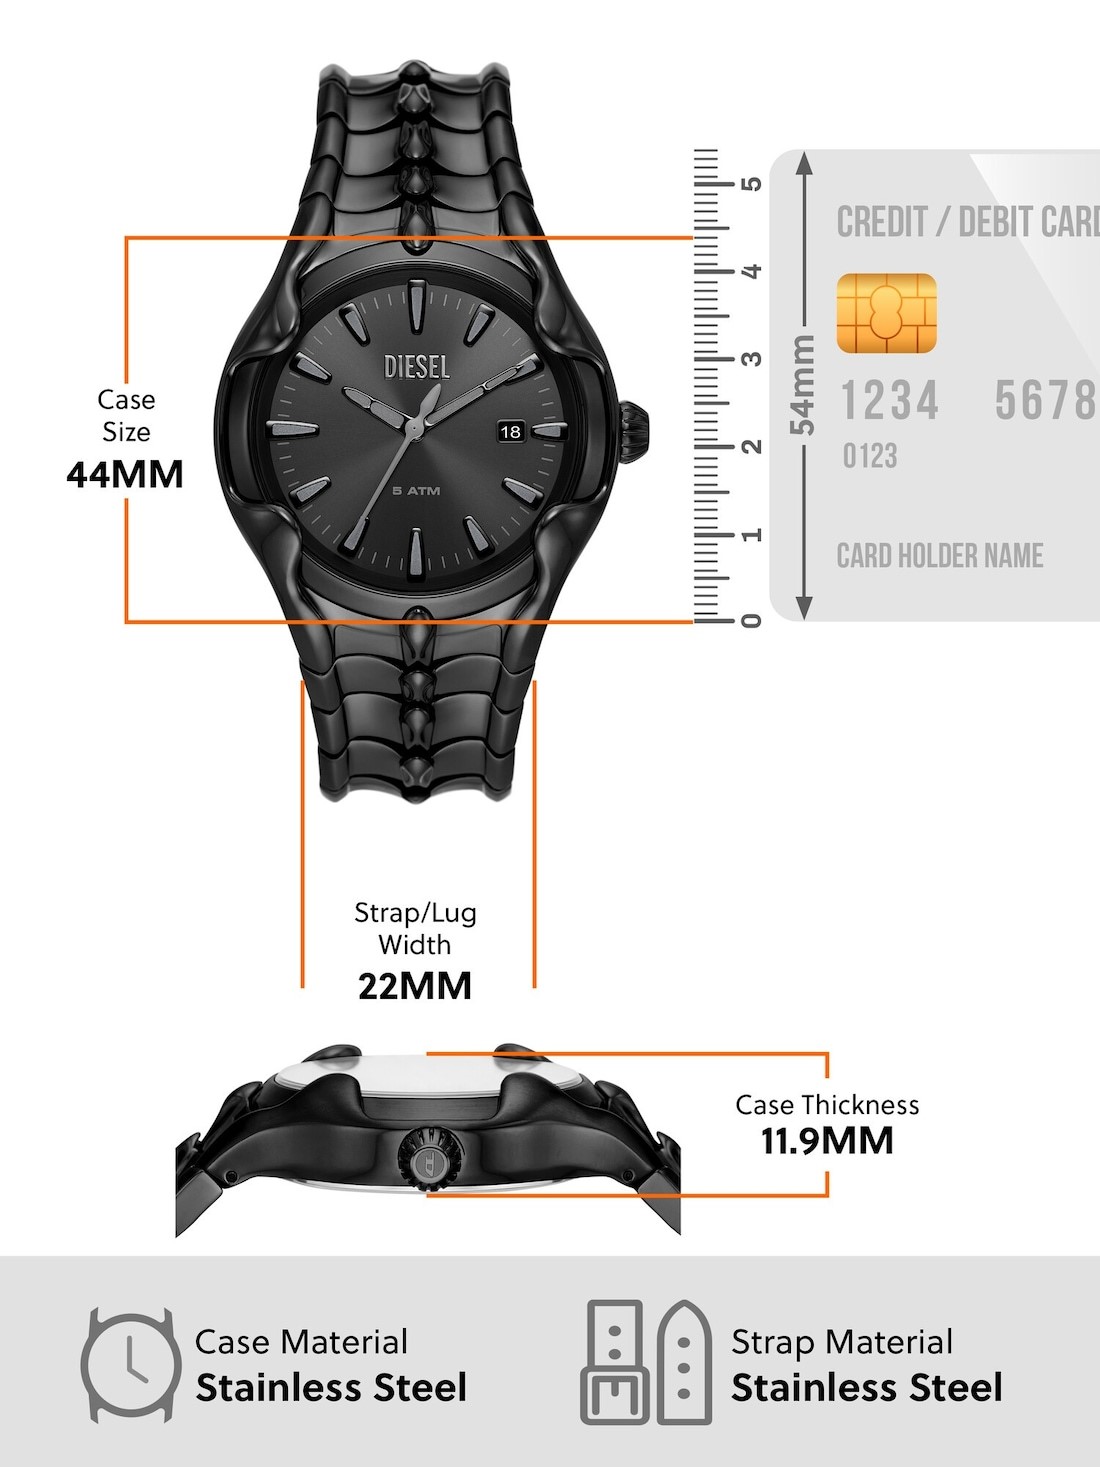 Buy Diesel Black Watch for Men Online | Analog Watches - Watch Station ...